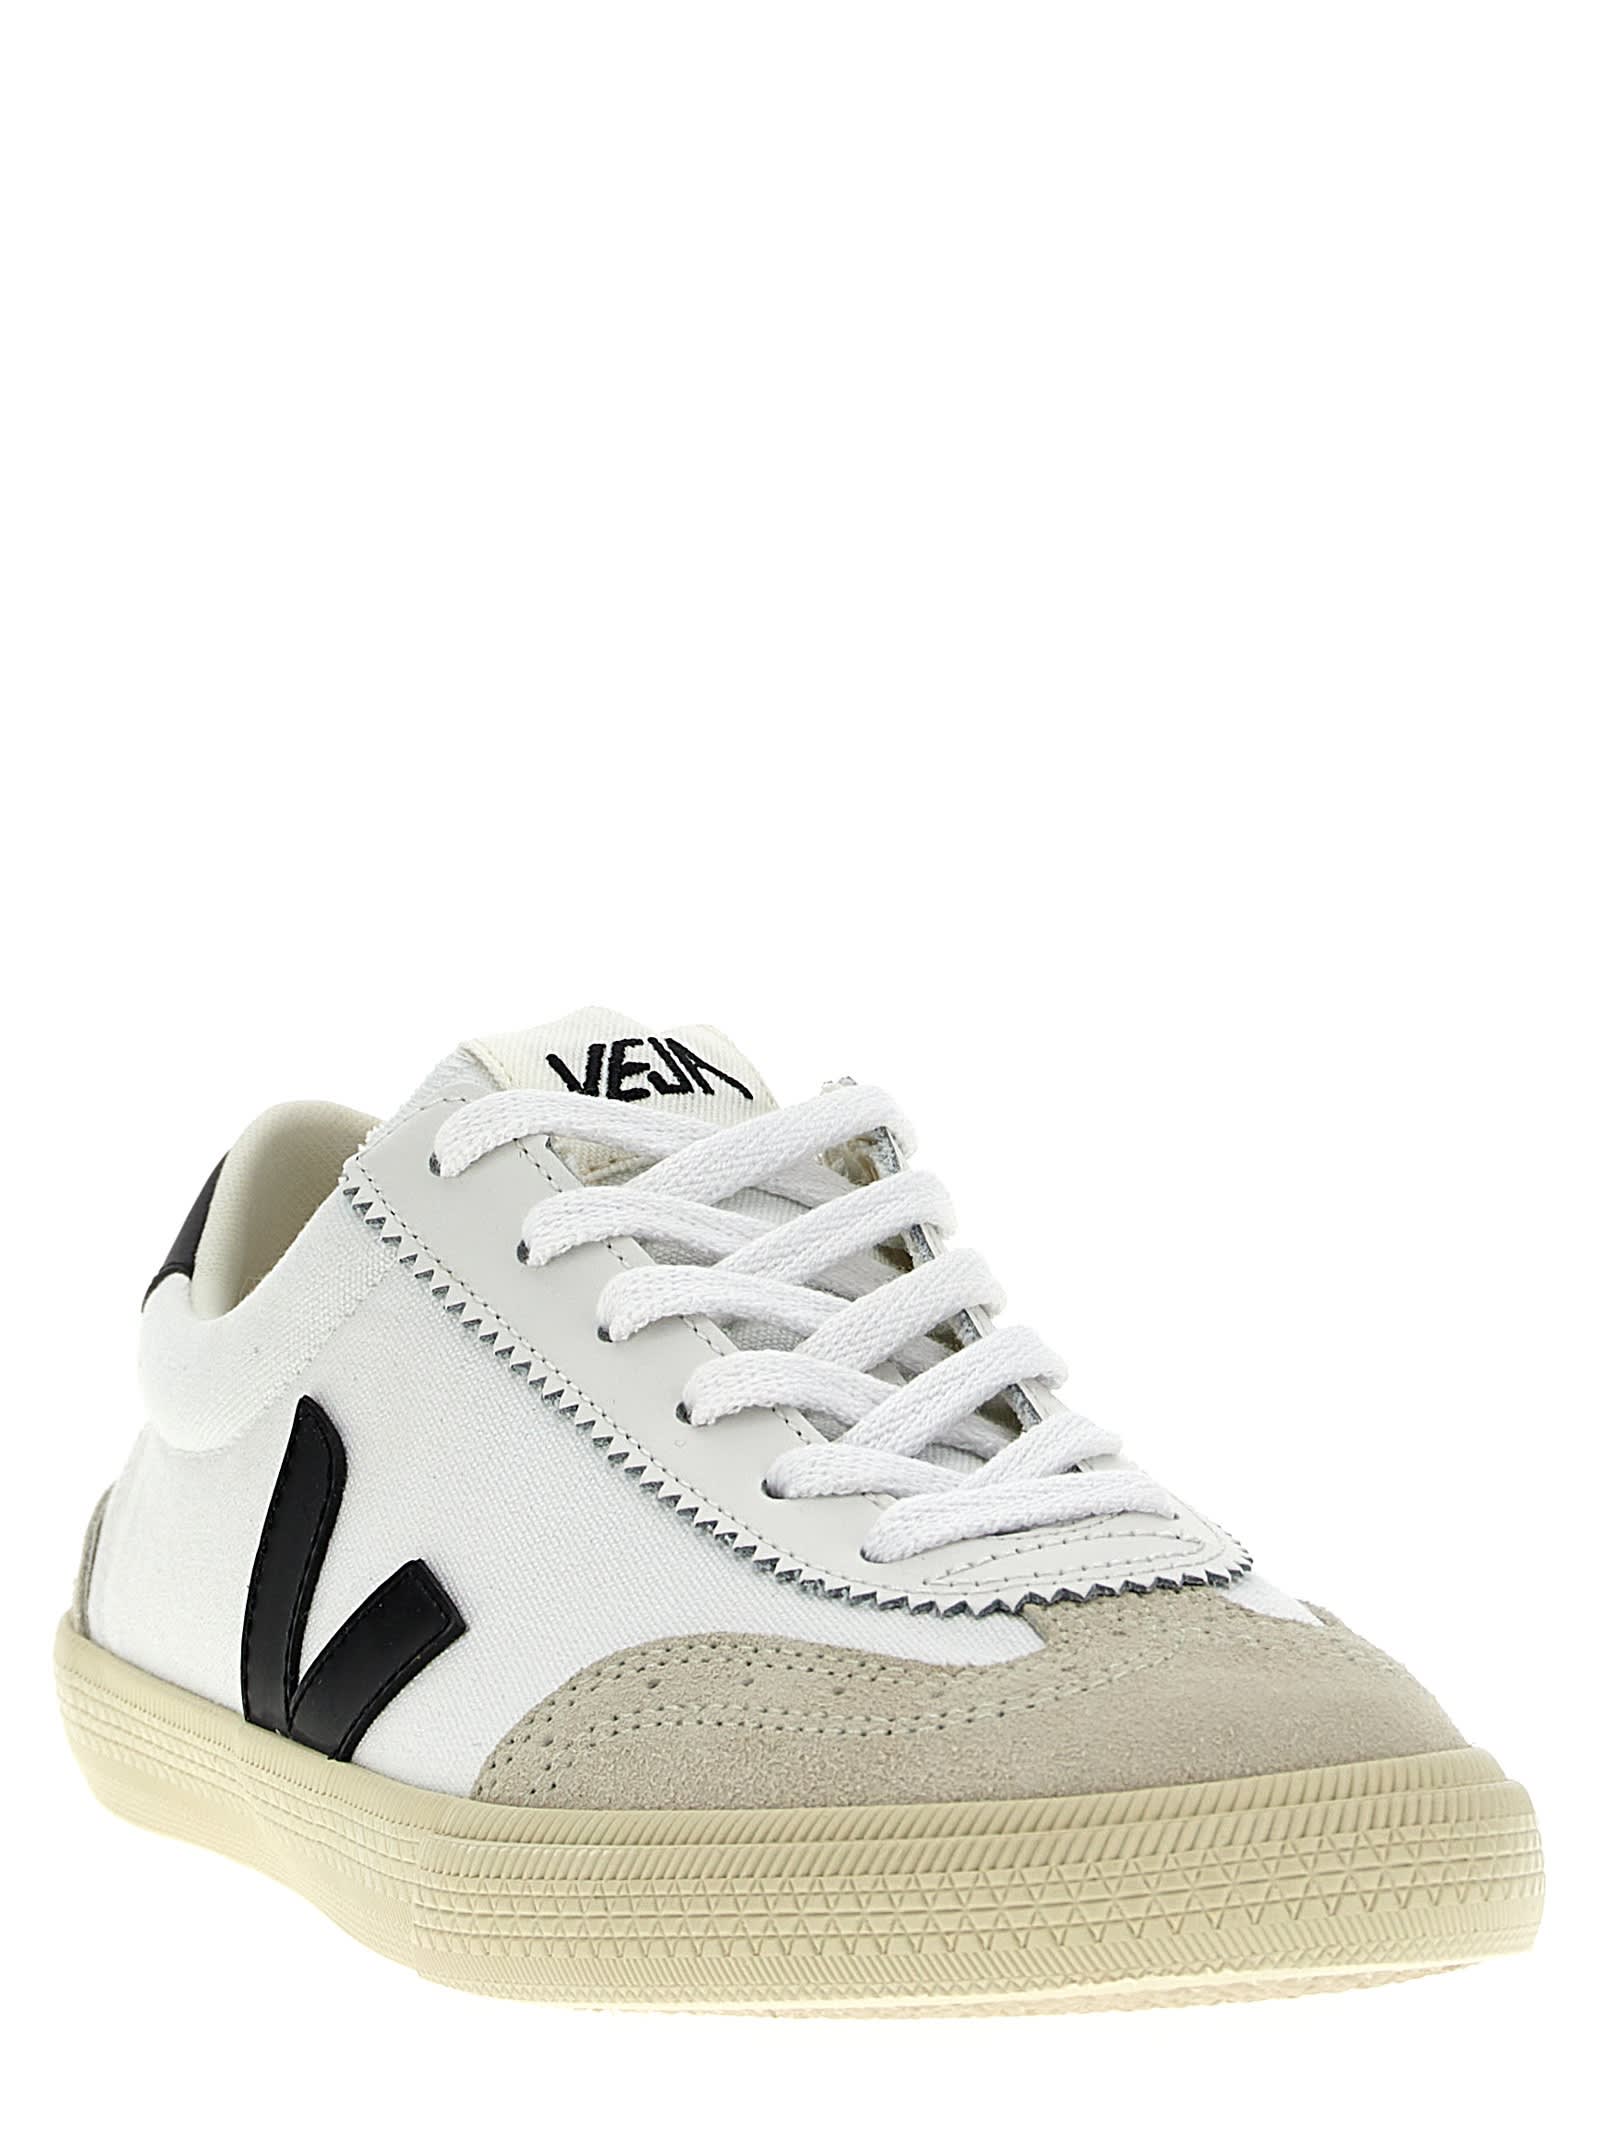 Shop Veja Volley Sneakers In White/black